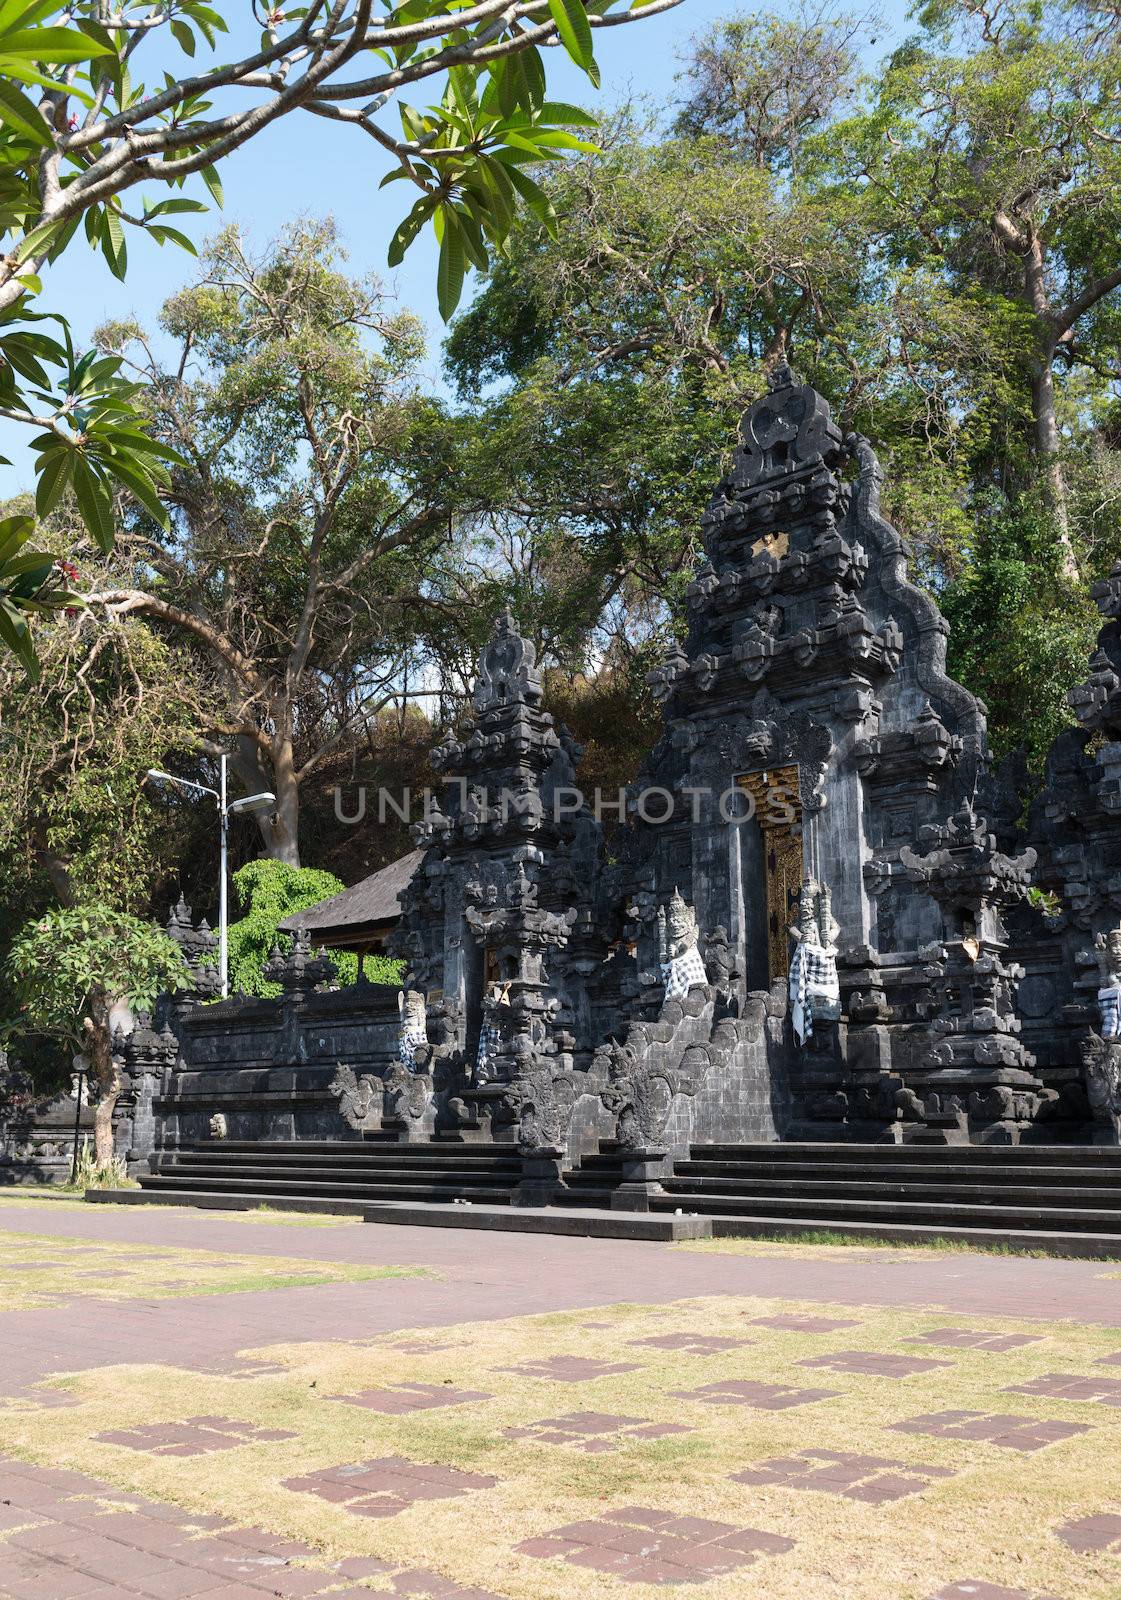 Entrance gate in Goa Lawah Bat Cave temple, Bali, Indonesia